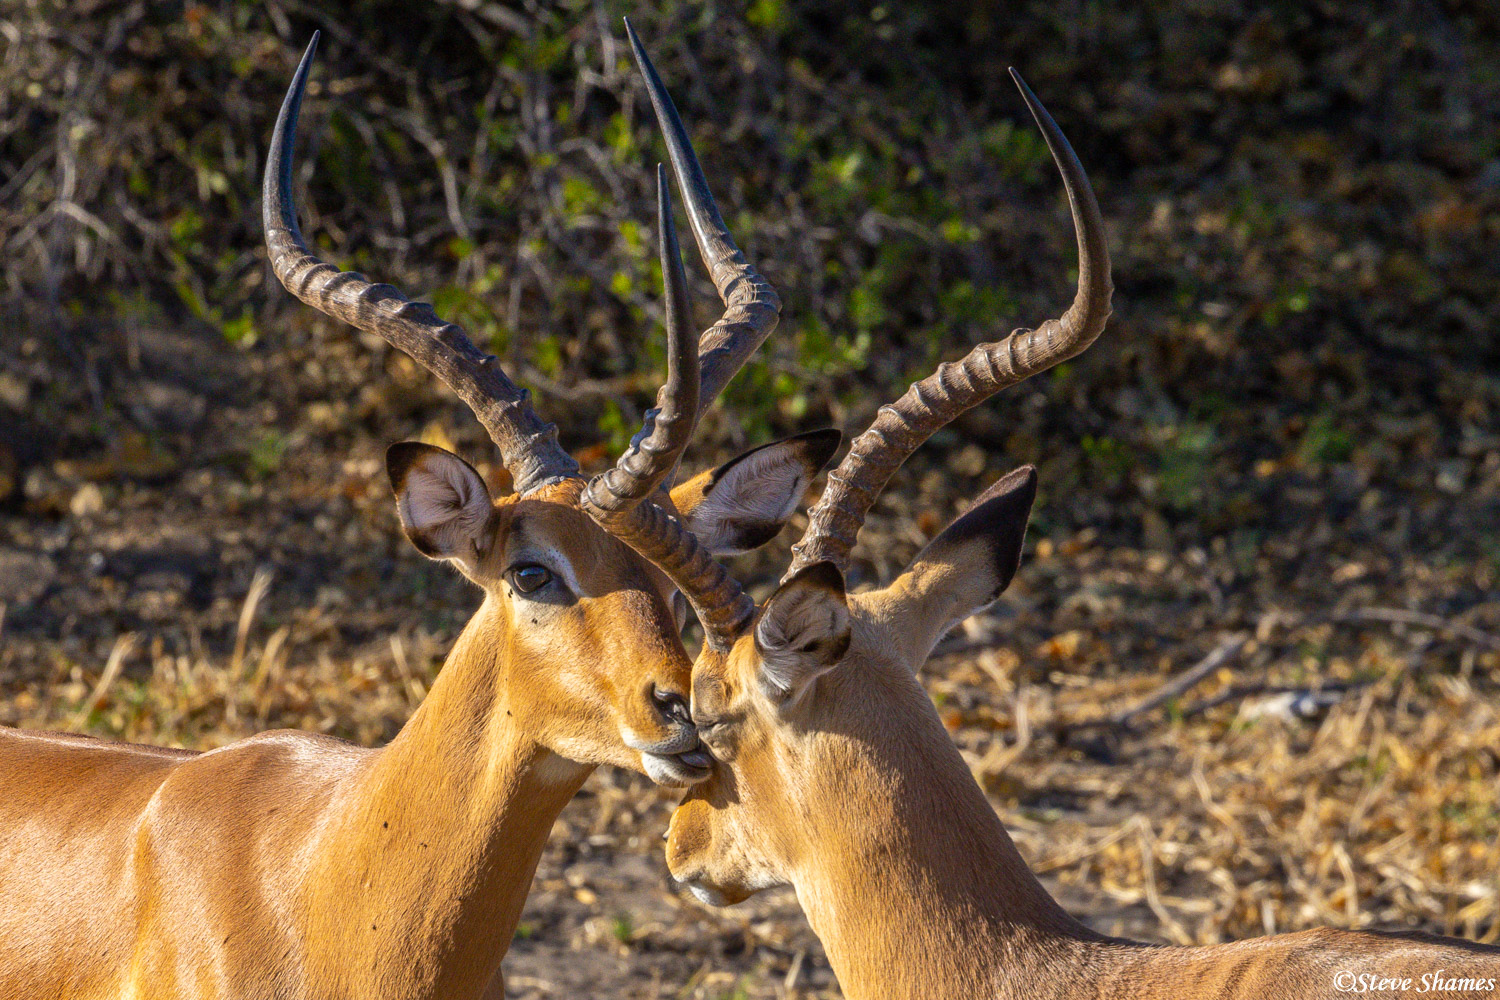 Bachelor impalas, having a little bro-mance.